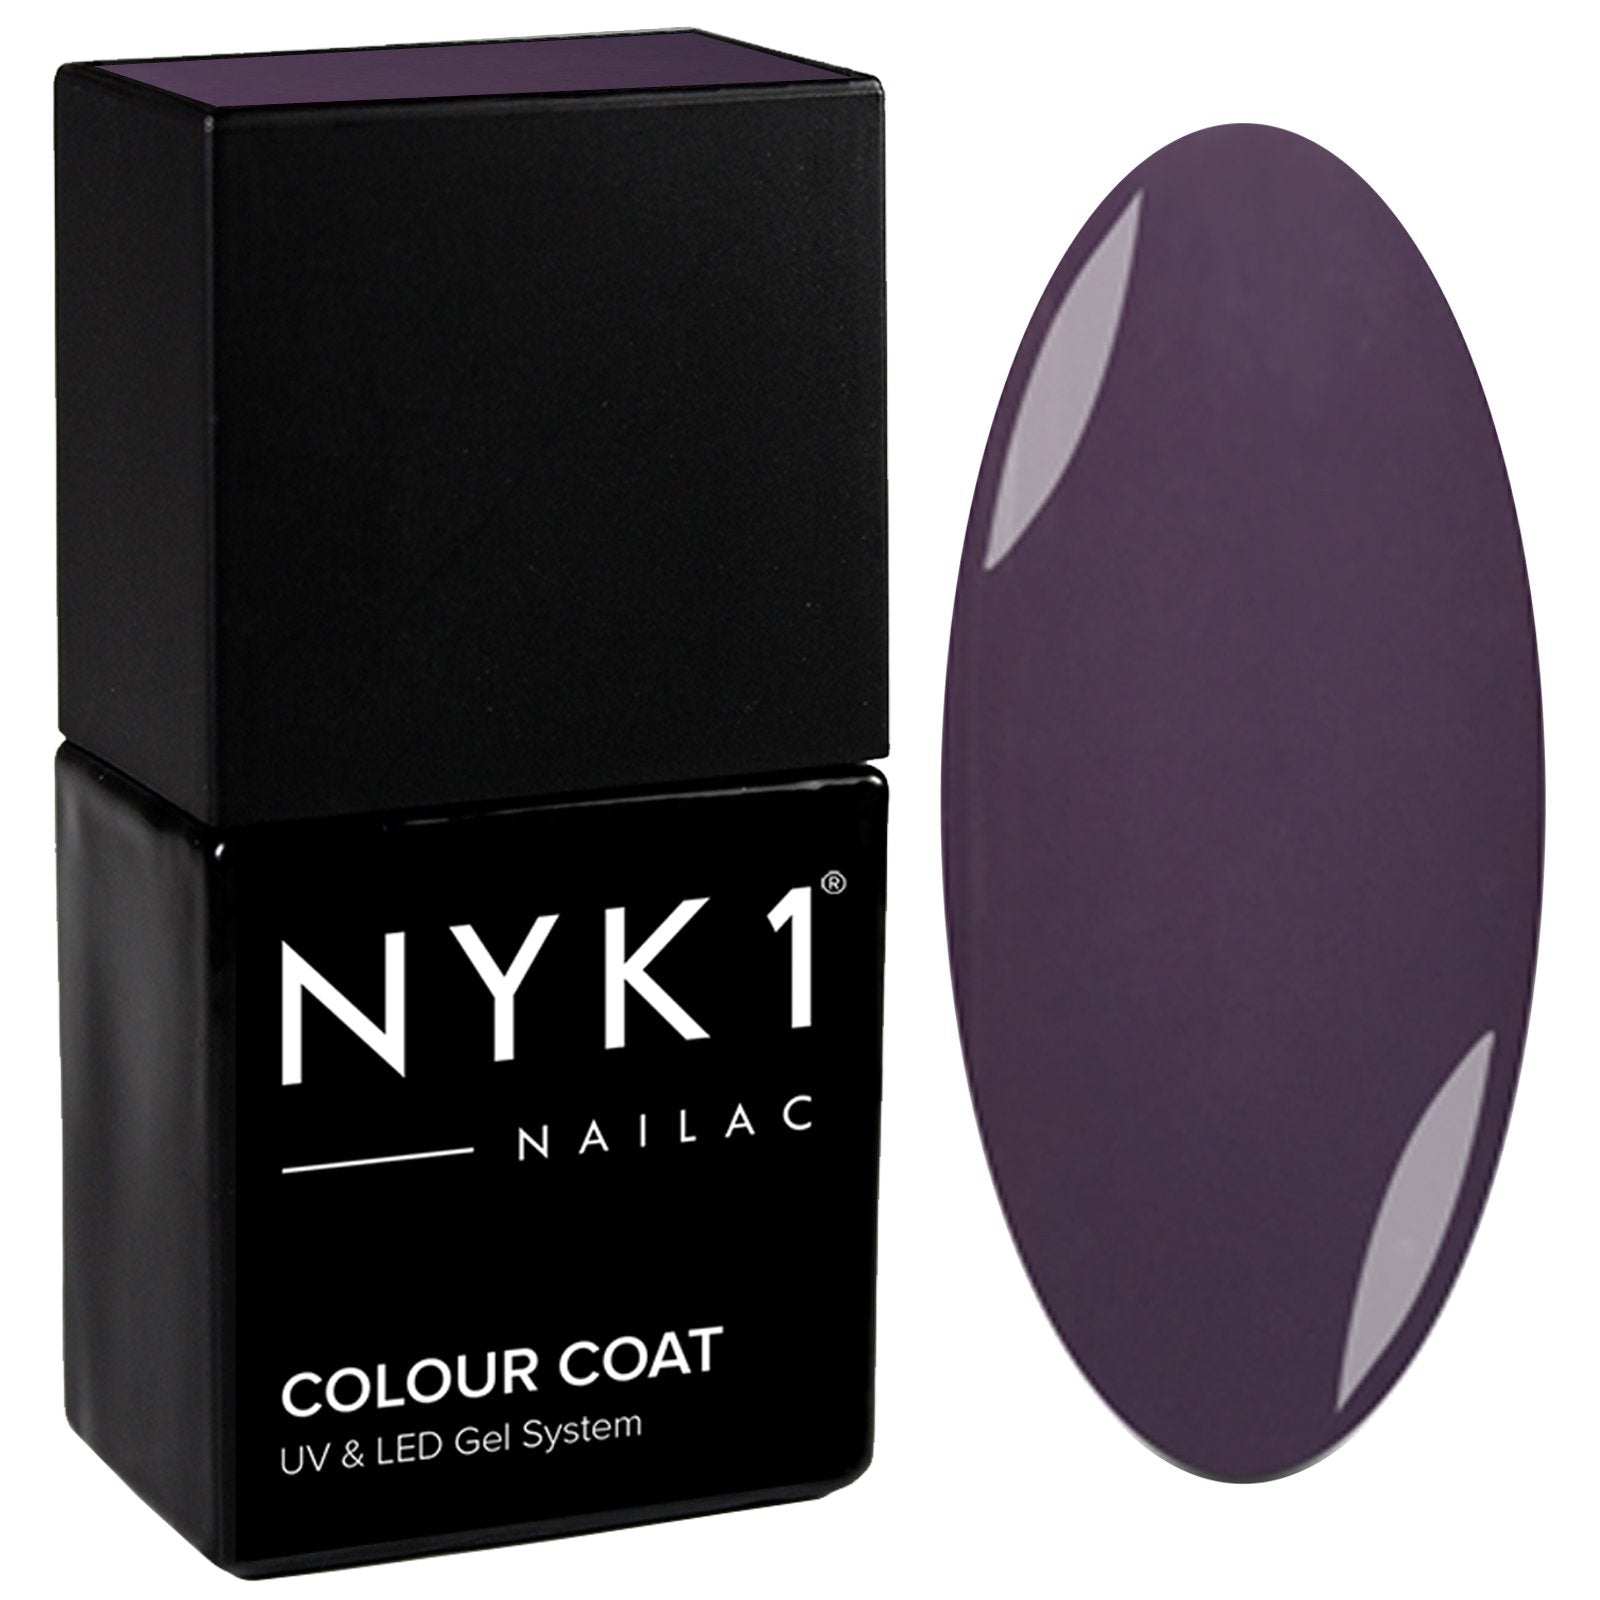 NYK1 Purple Charisma Gel Nail Polish